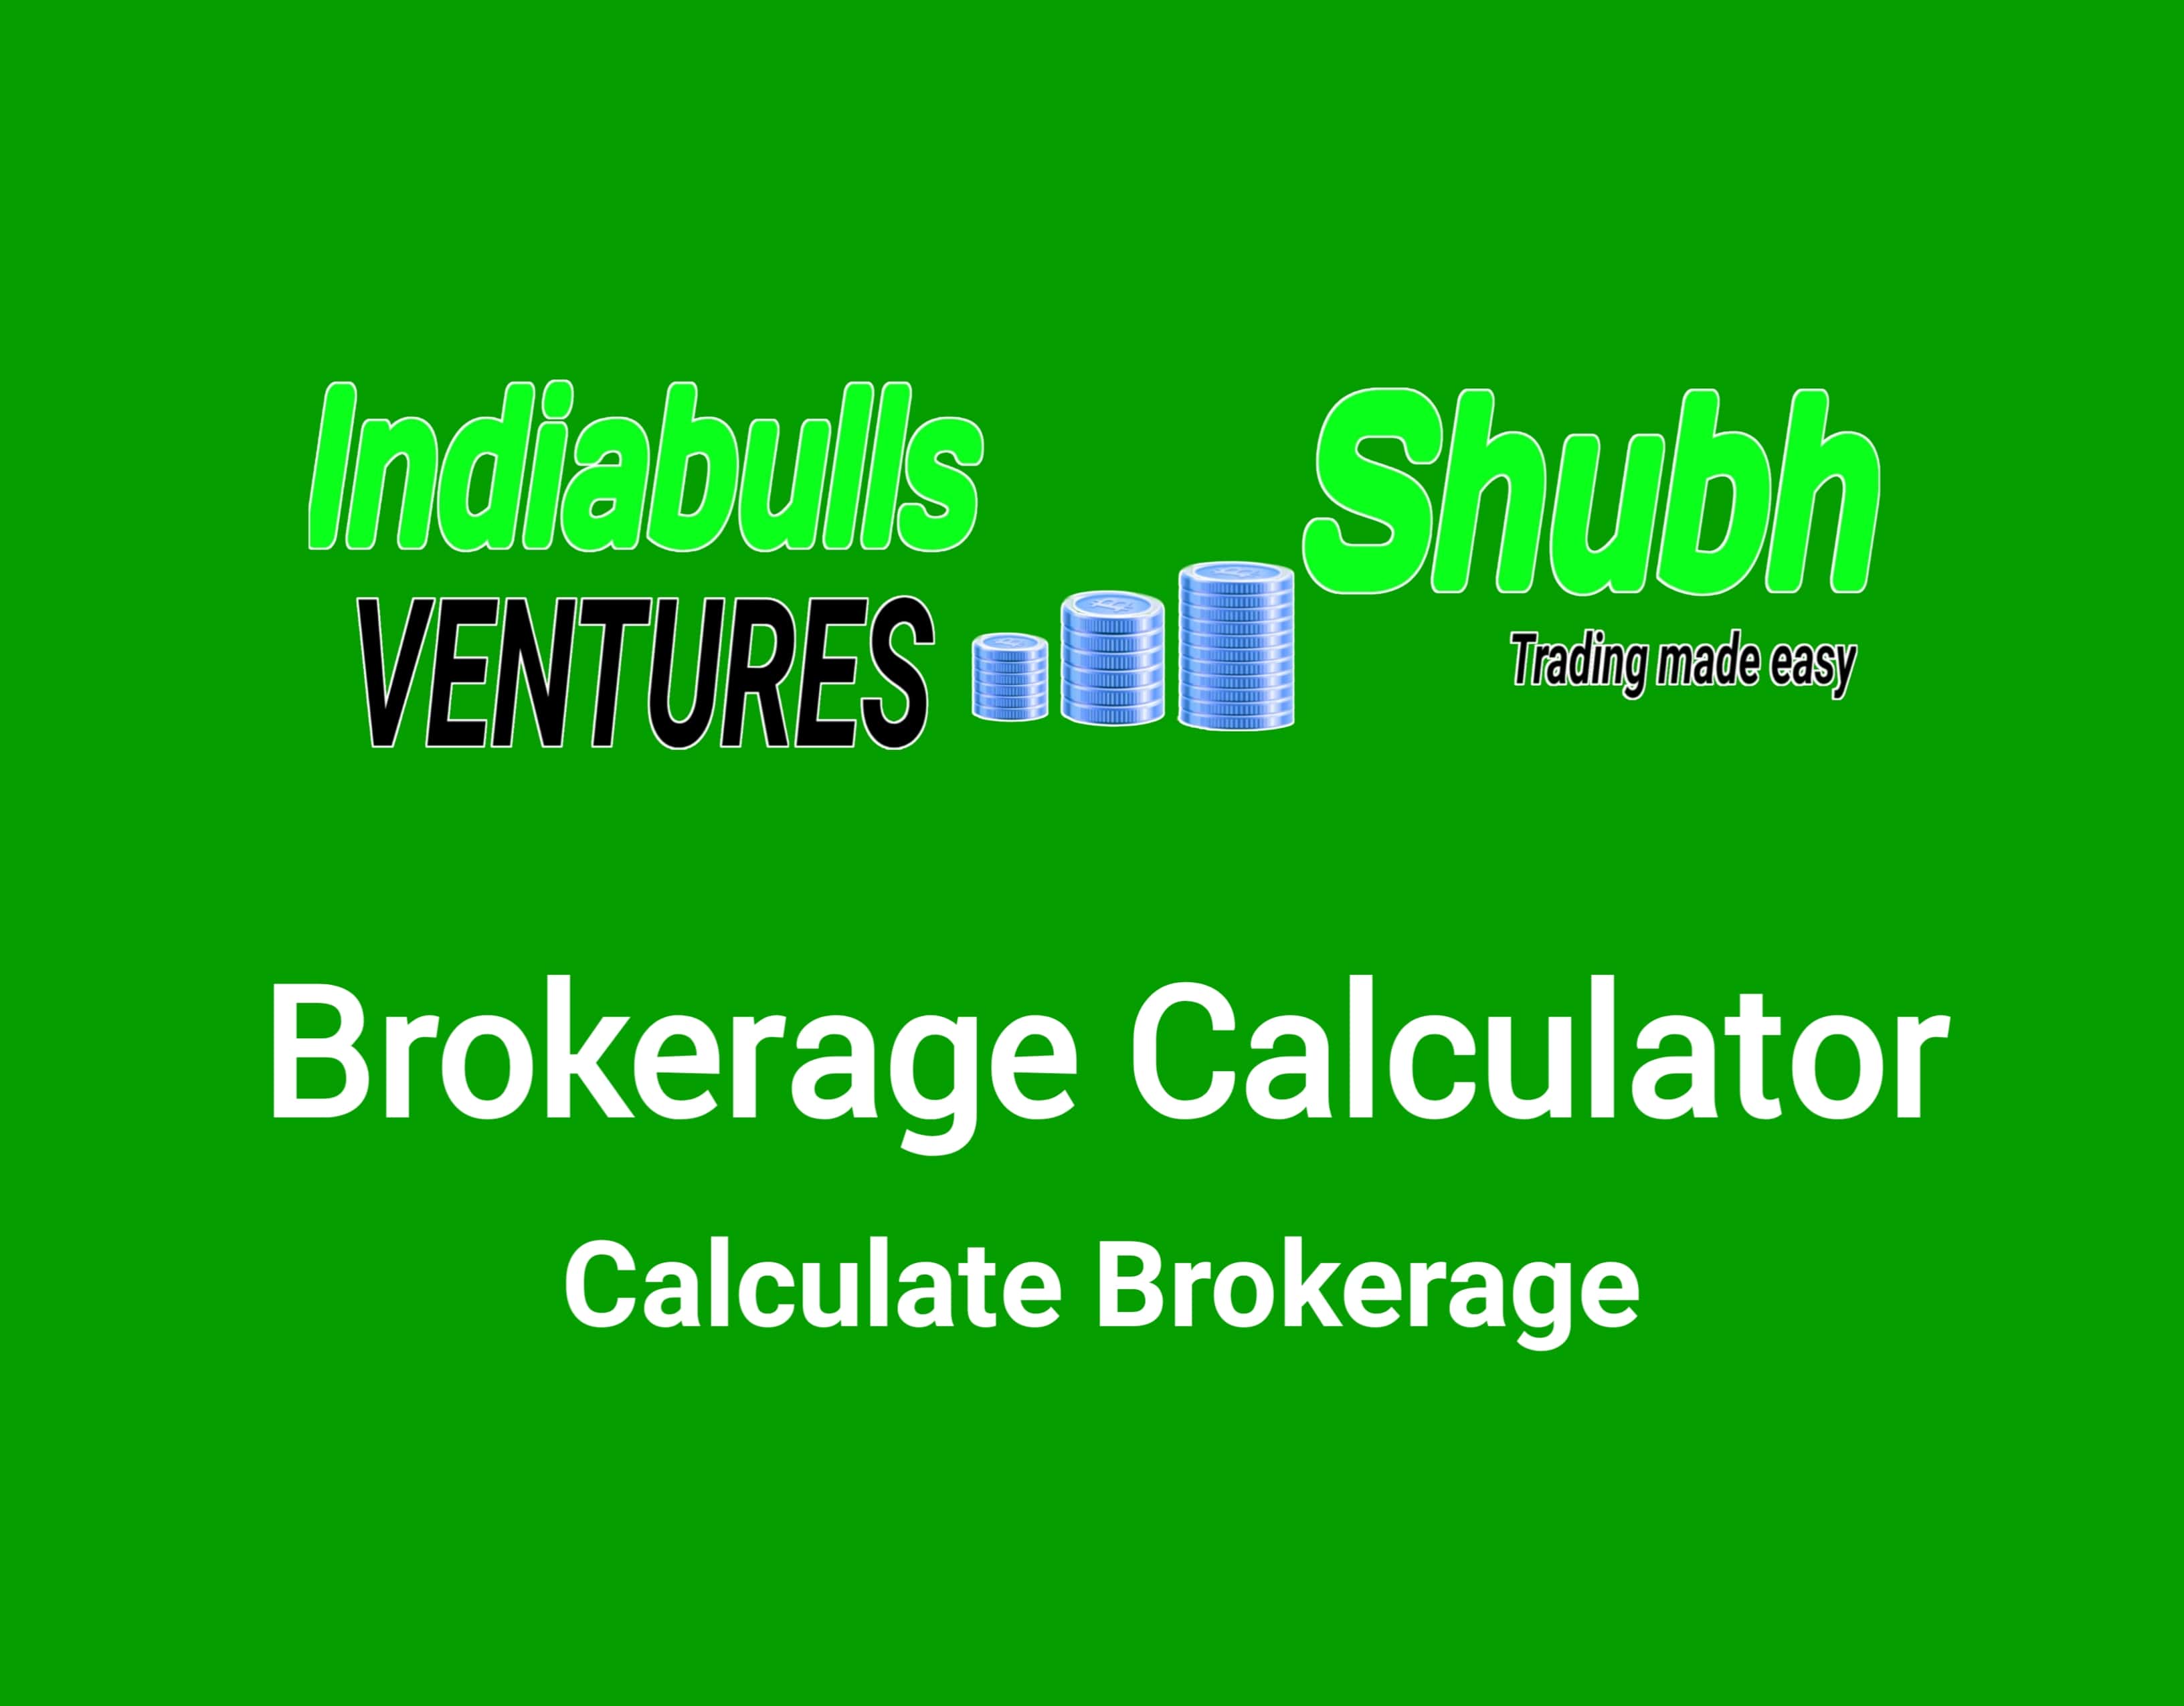 Brokerage Calculator